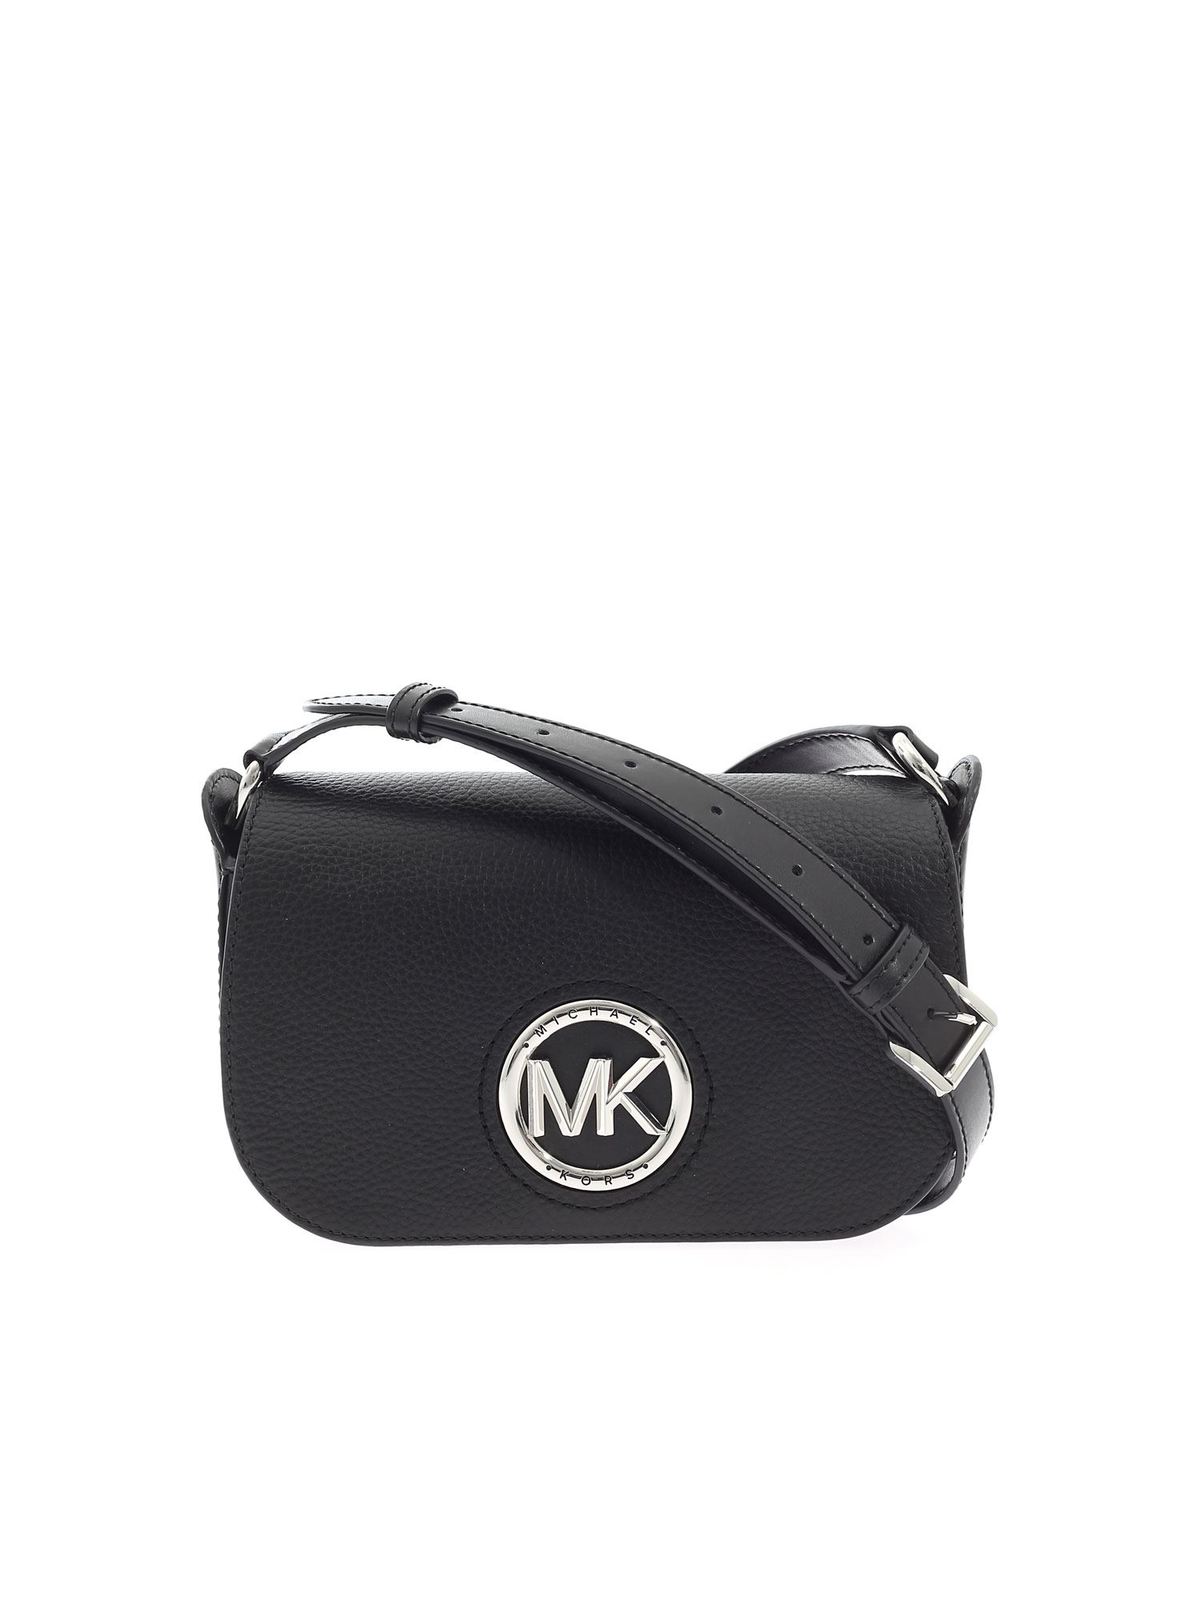 michael kors purse mk logo